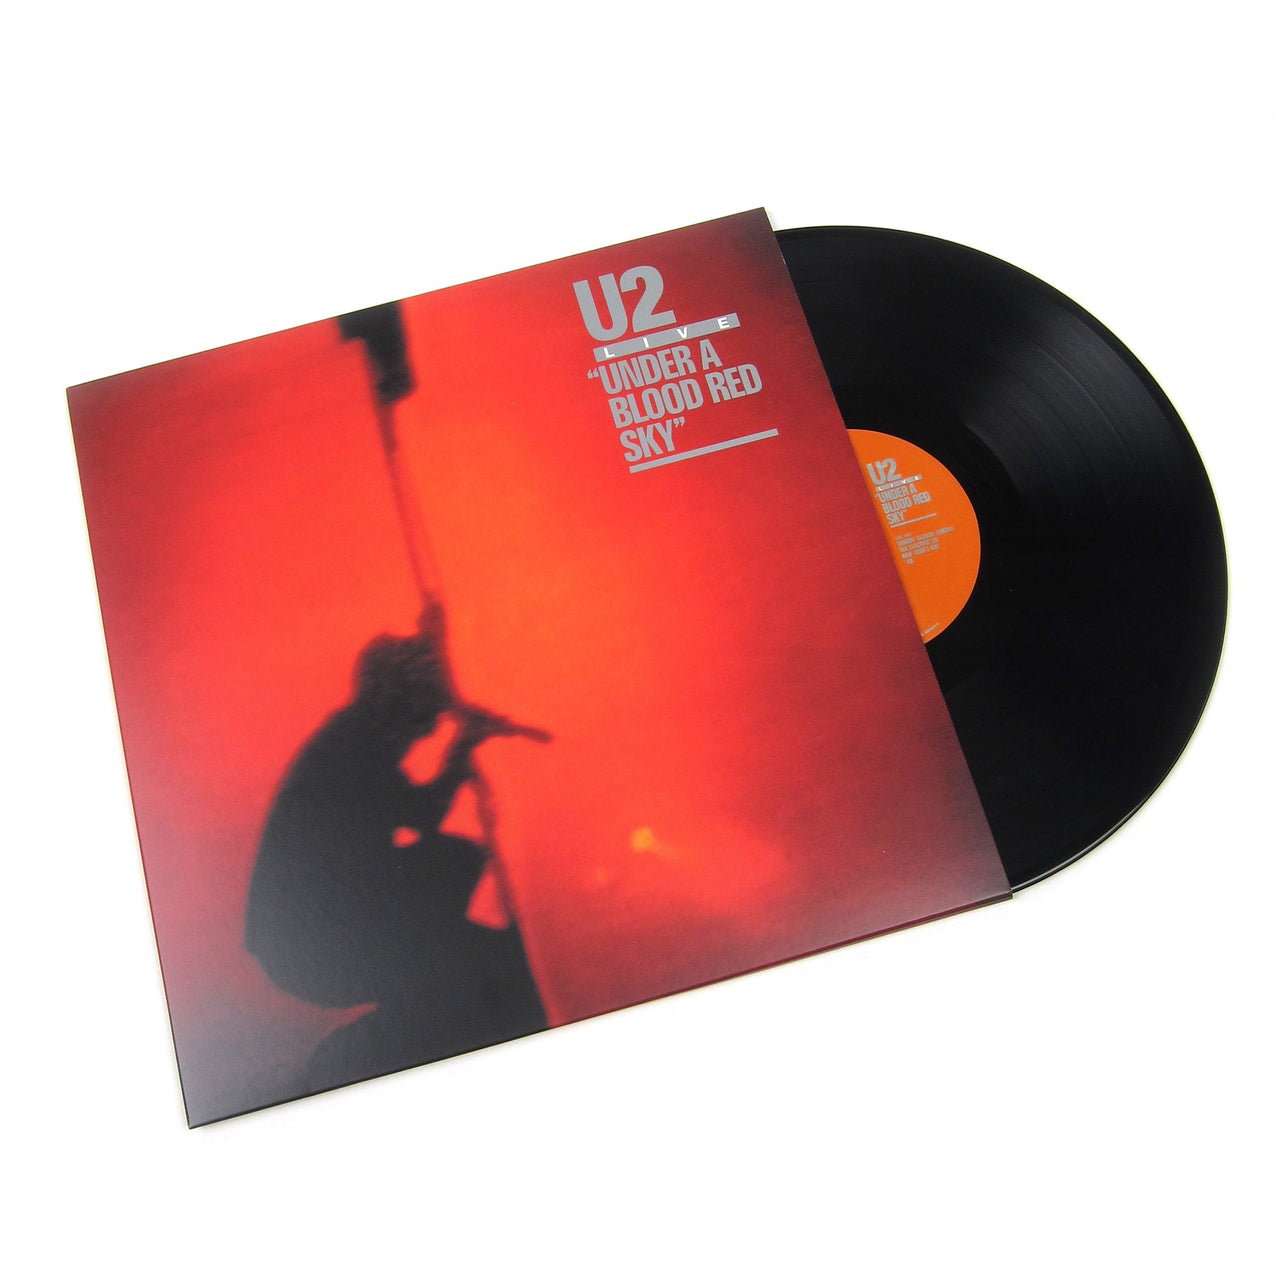 U2: Under A Blood Red Sky Vinyl LP (Remastered)